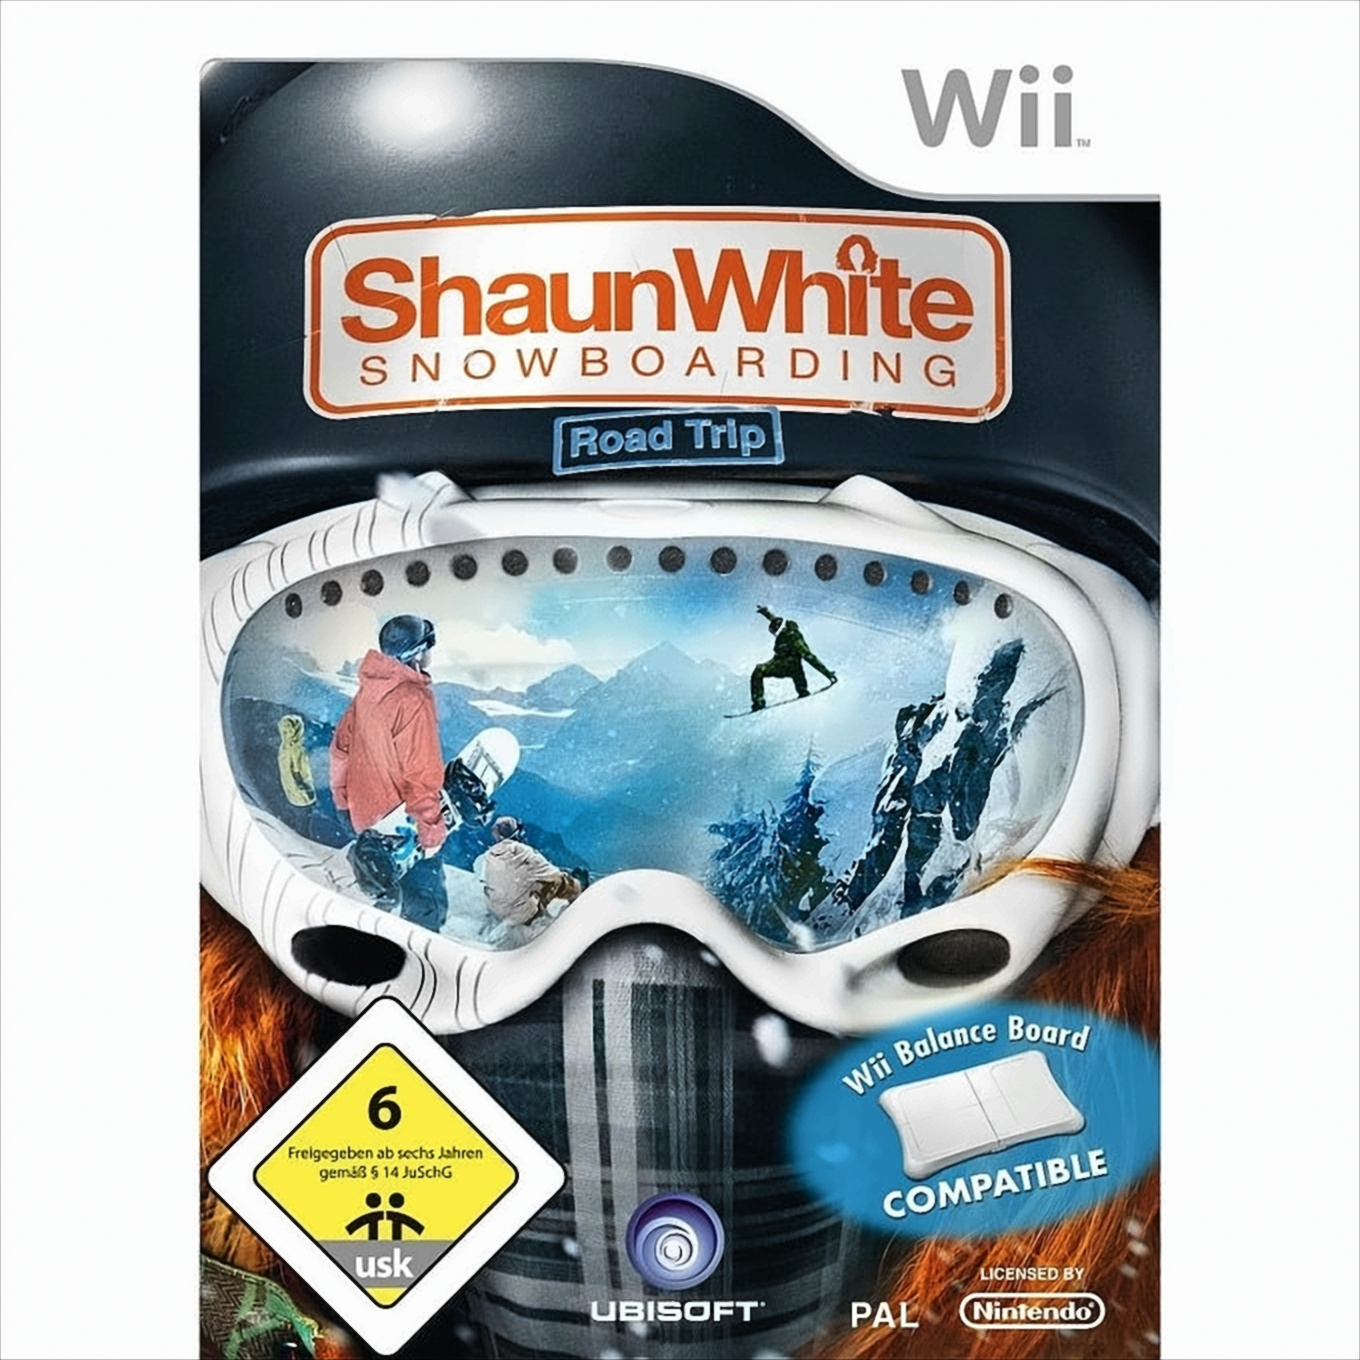 Snowboarding: White Wii] Road - Shaun Trip [Nintendo